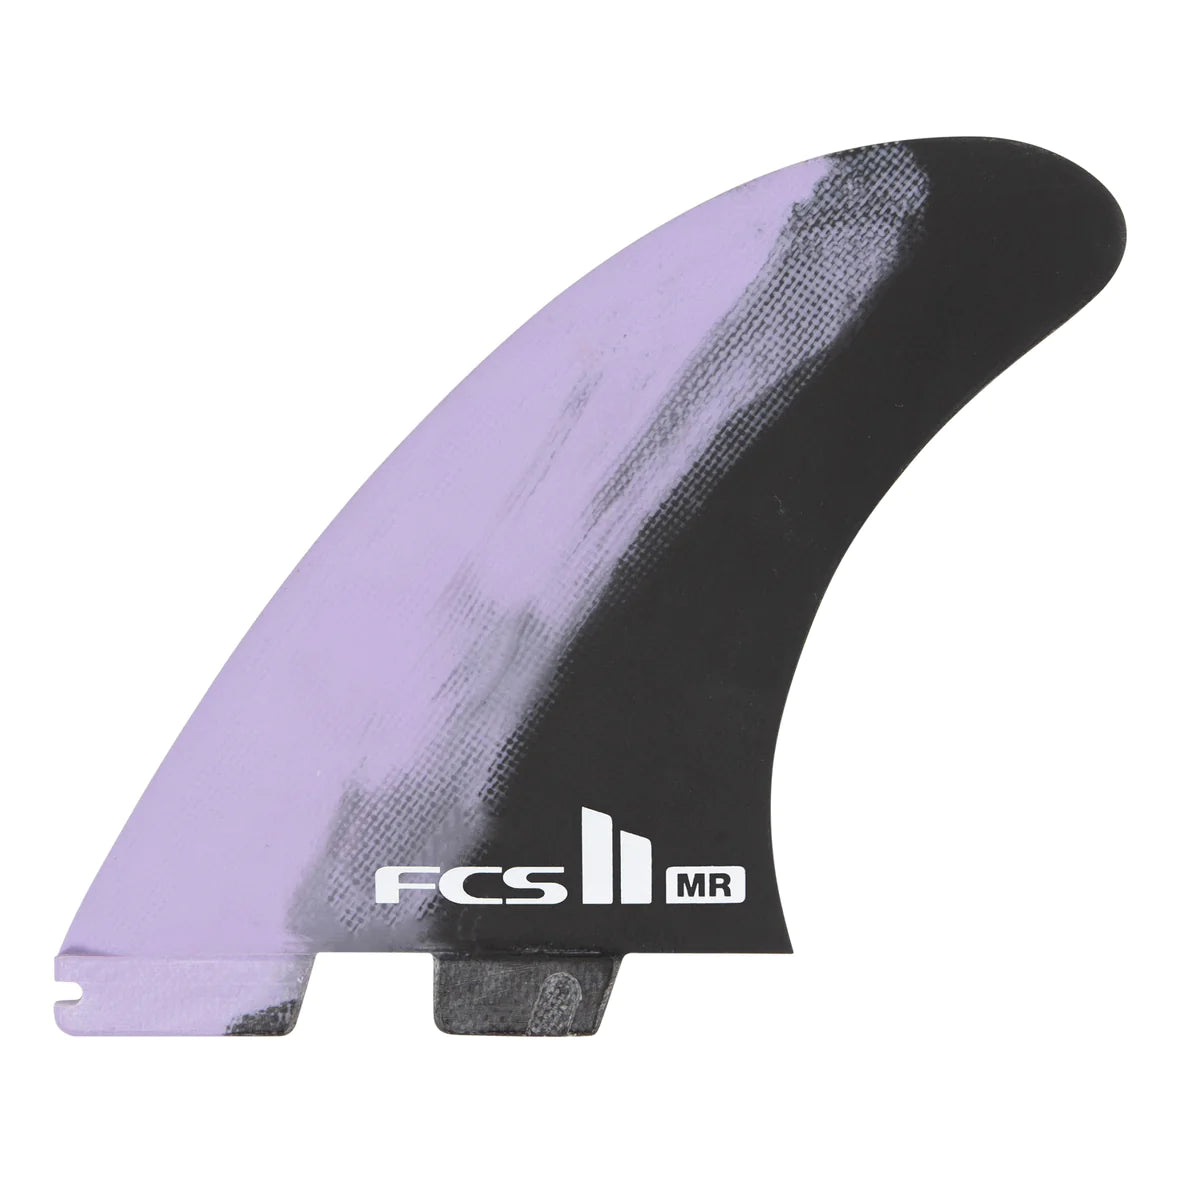 FCS II MR Twin Fins with mini Trailer- PC Tri Set Xlarge - Black White / Neon Swirl / Dusty Blue Fins Lavender Black